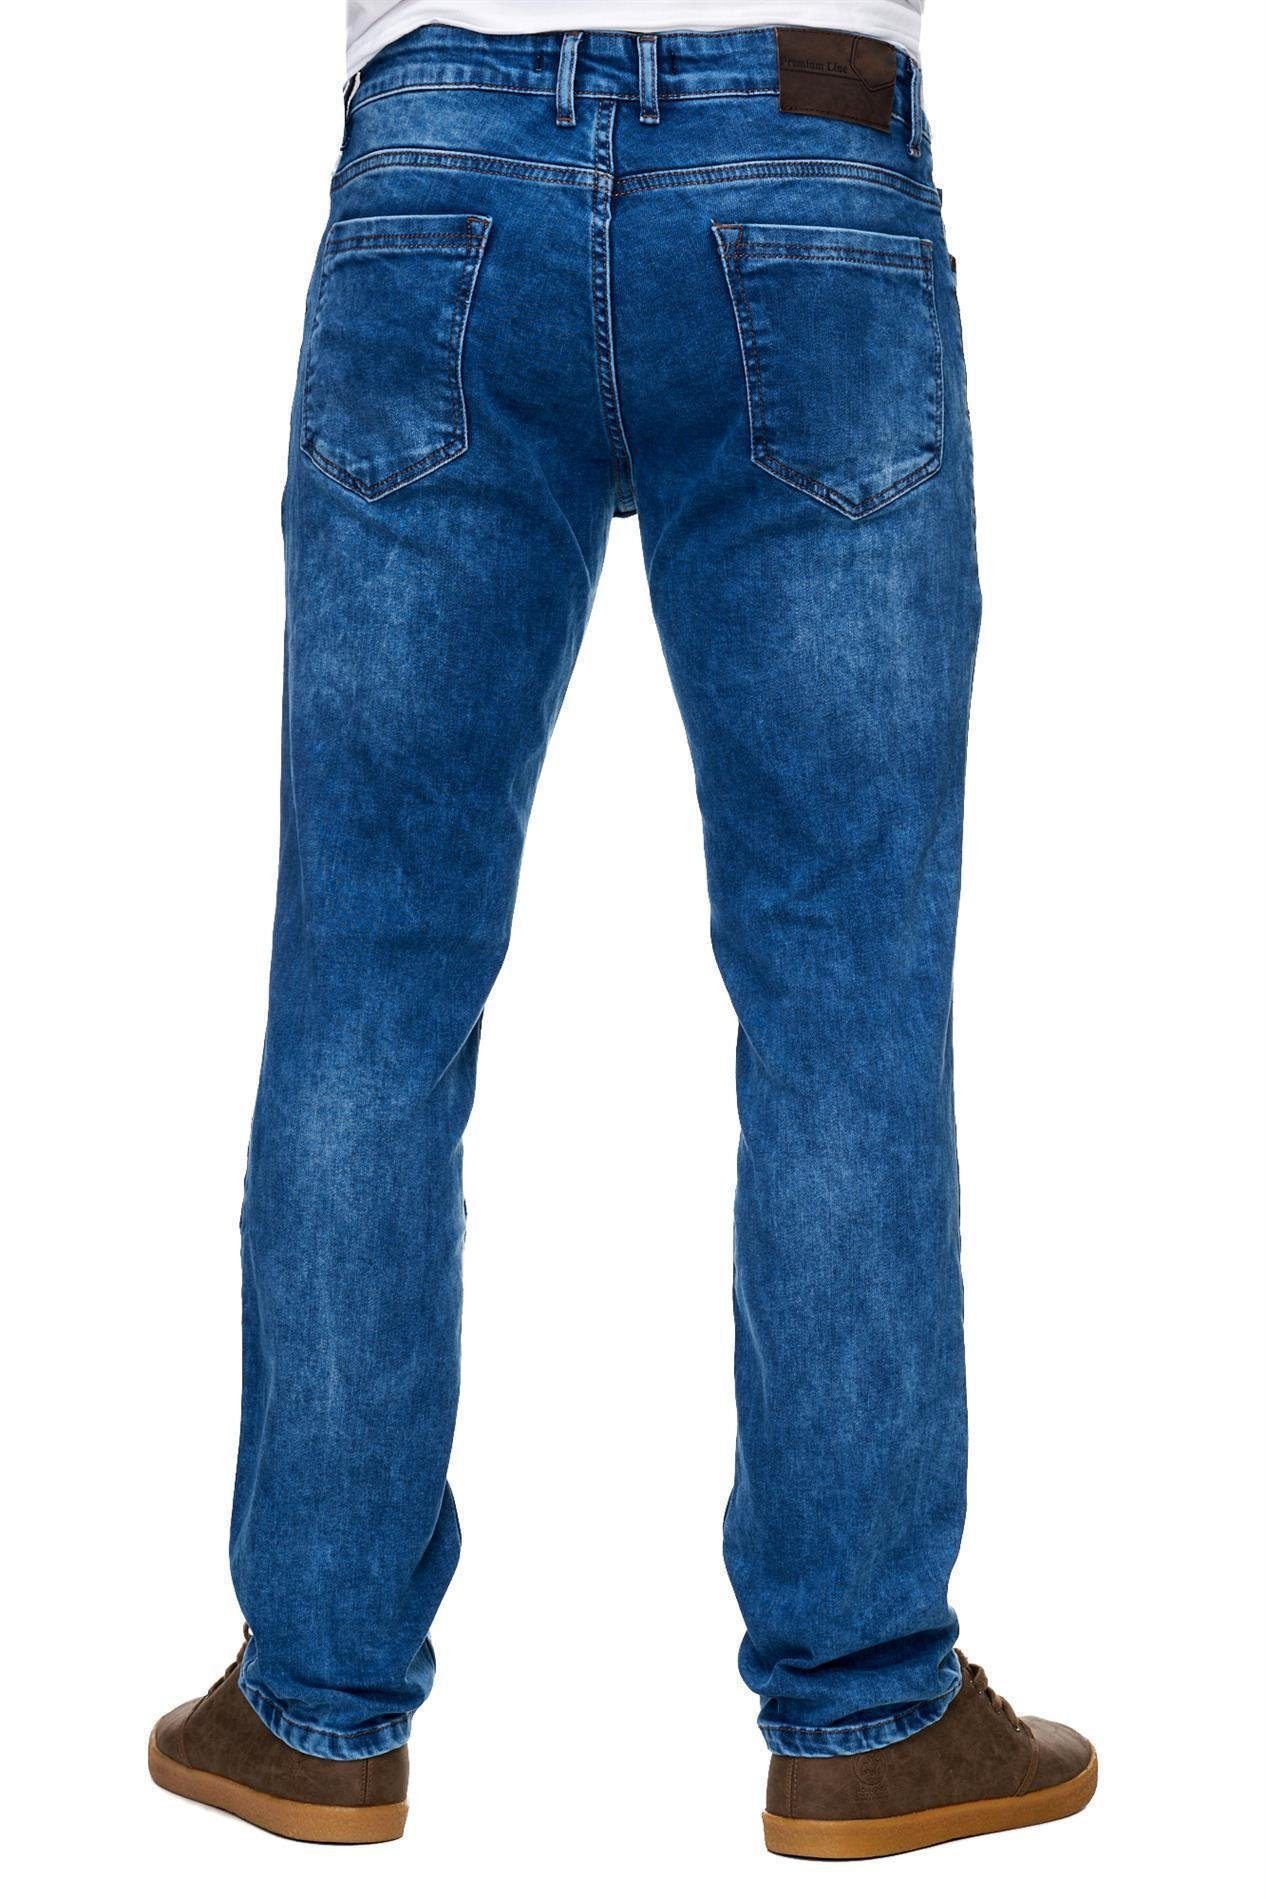 Reslad Stretch-Jeans Reslad Jeans-Hose blau Stretch Basic Stretch-Denim Jeans-Herren Slim Fit Slim Style Fit Jeans-Hose